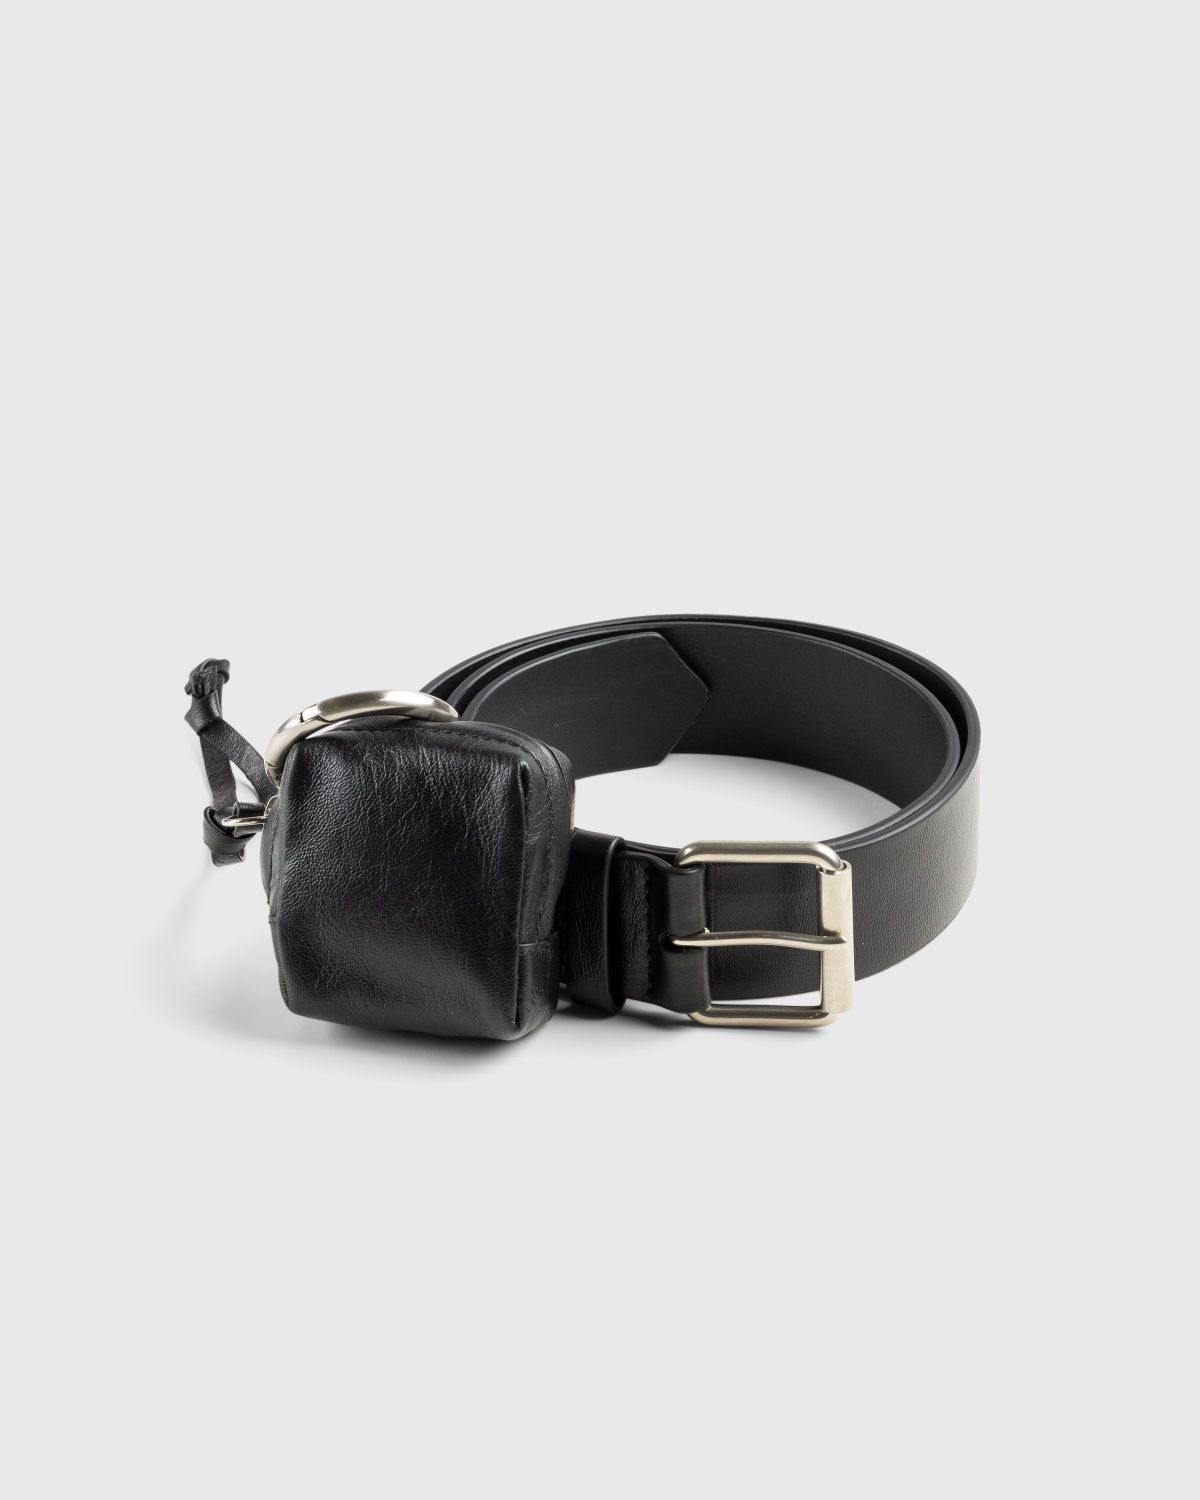 Dries van Noten – Leather Belt With Pouch Black - Belts - Black - Image 1